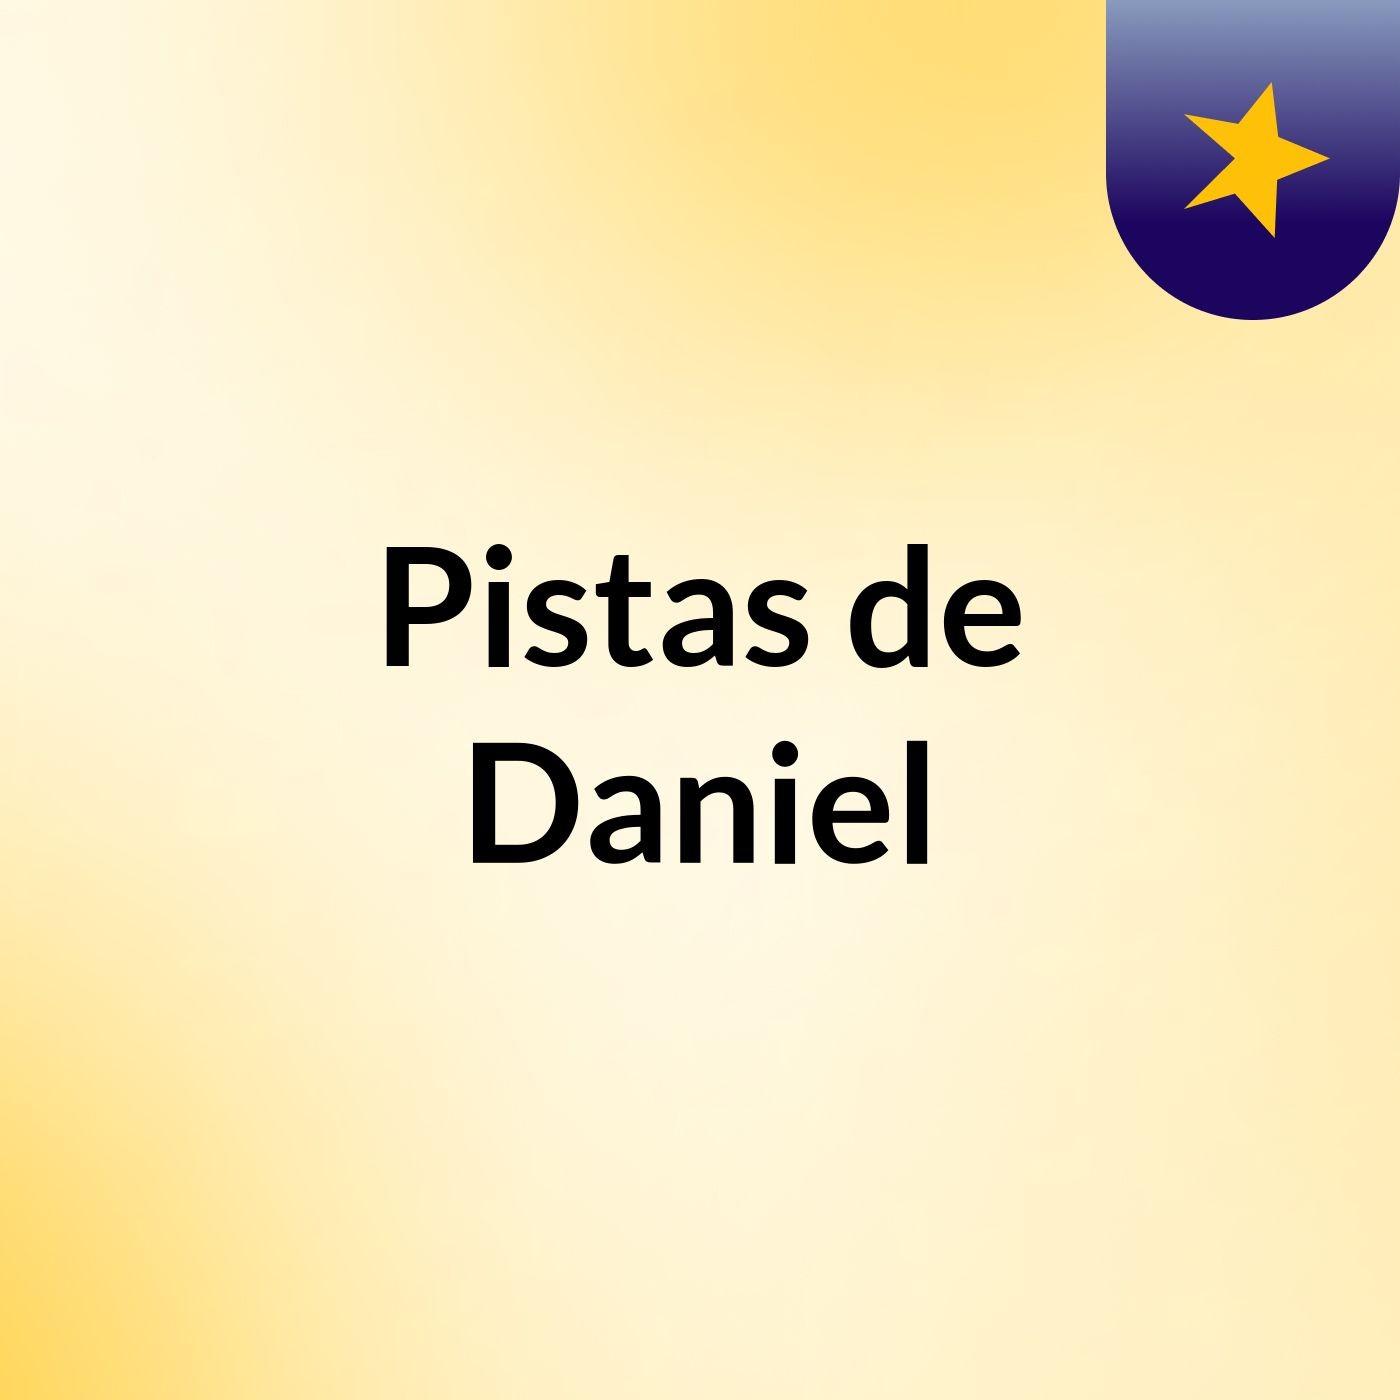 Pistas de Daniel